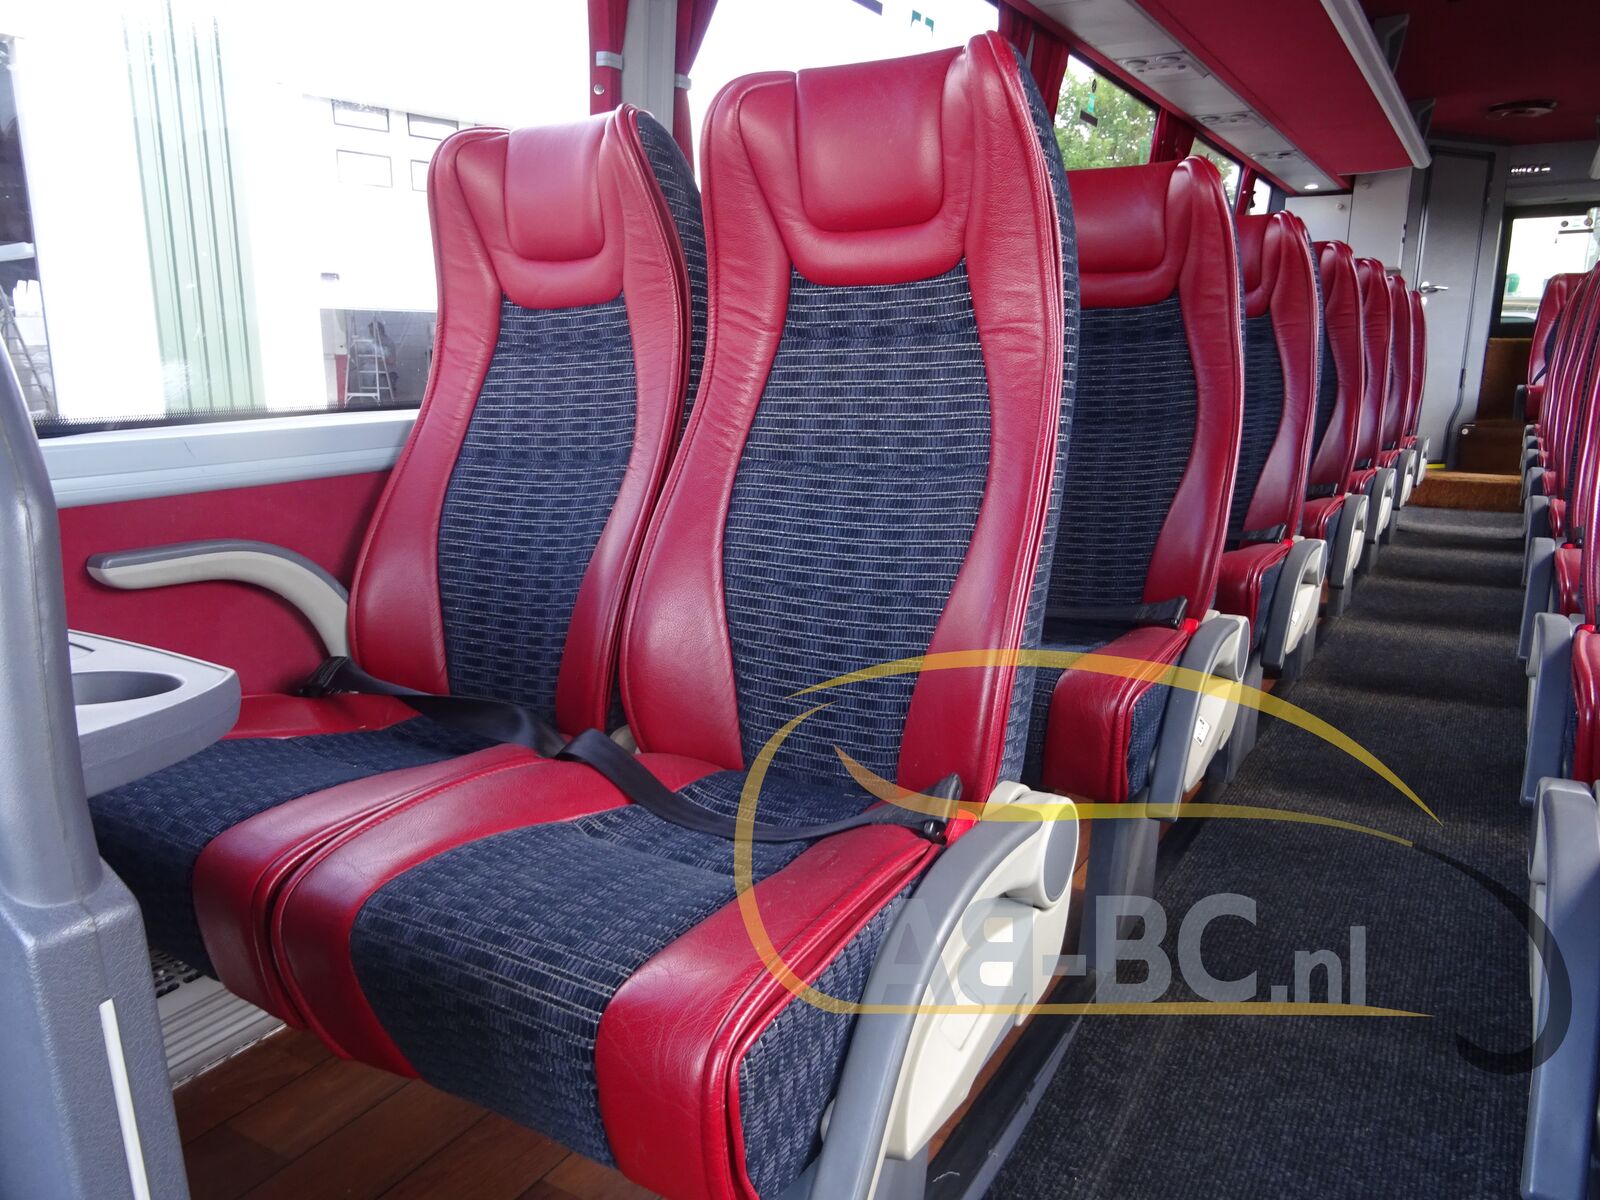 coach-bus-TEMSA-MD9-34-Seats-EURO-6---1660816751064114496_orig_1996c3a3f26aa36105d74e27f12f09be--22080209493466675200